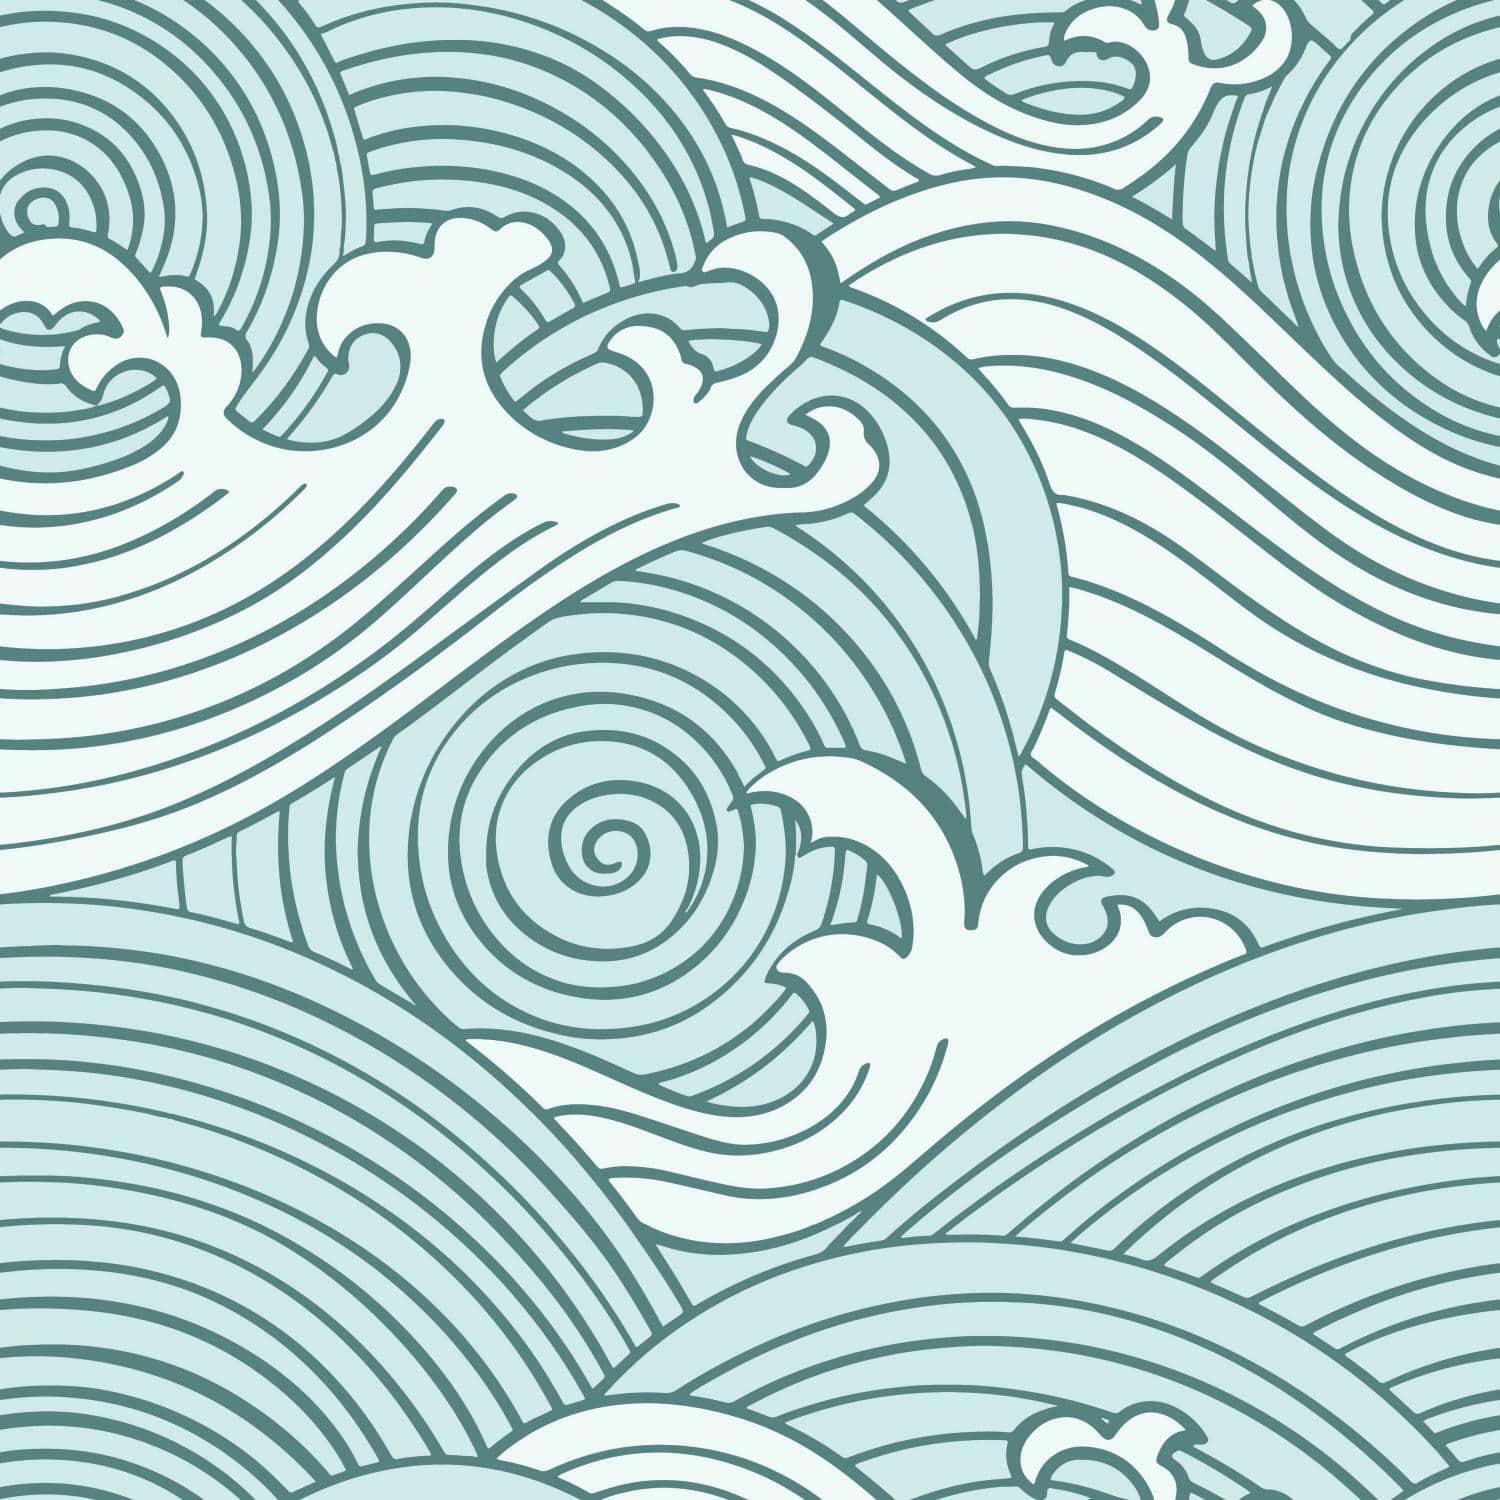 RoomMates Asian Waves Peel & Stick Wallpaper